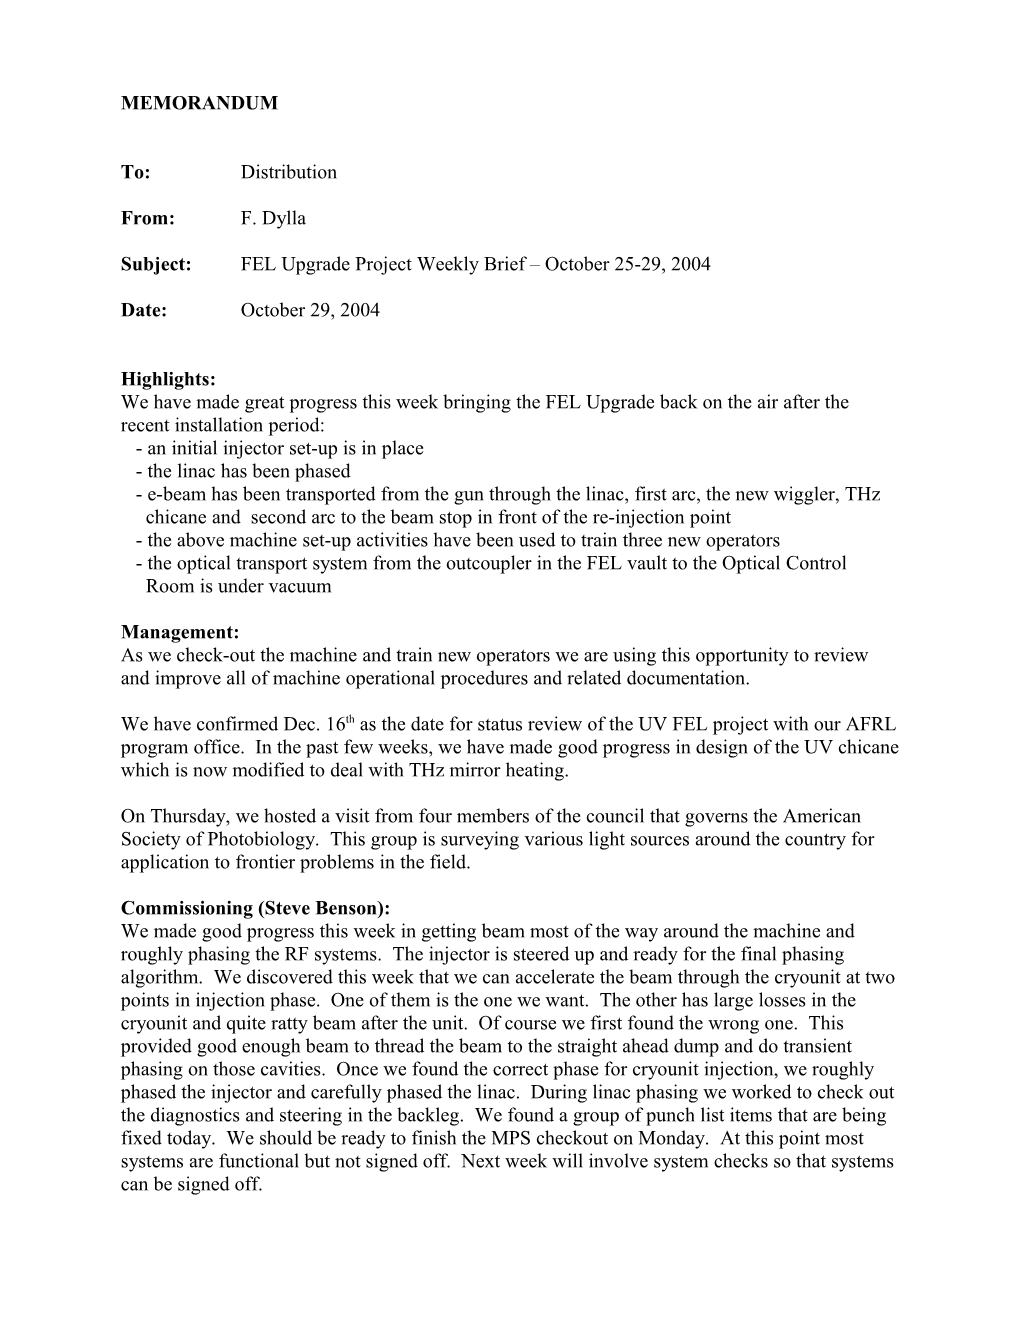 Subject: FEL Upgrade Project Weekly Brief October 25-29, 2004